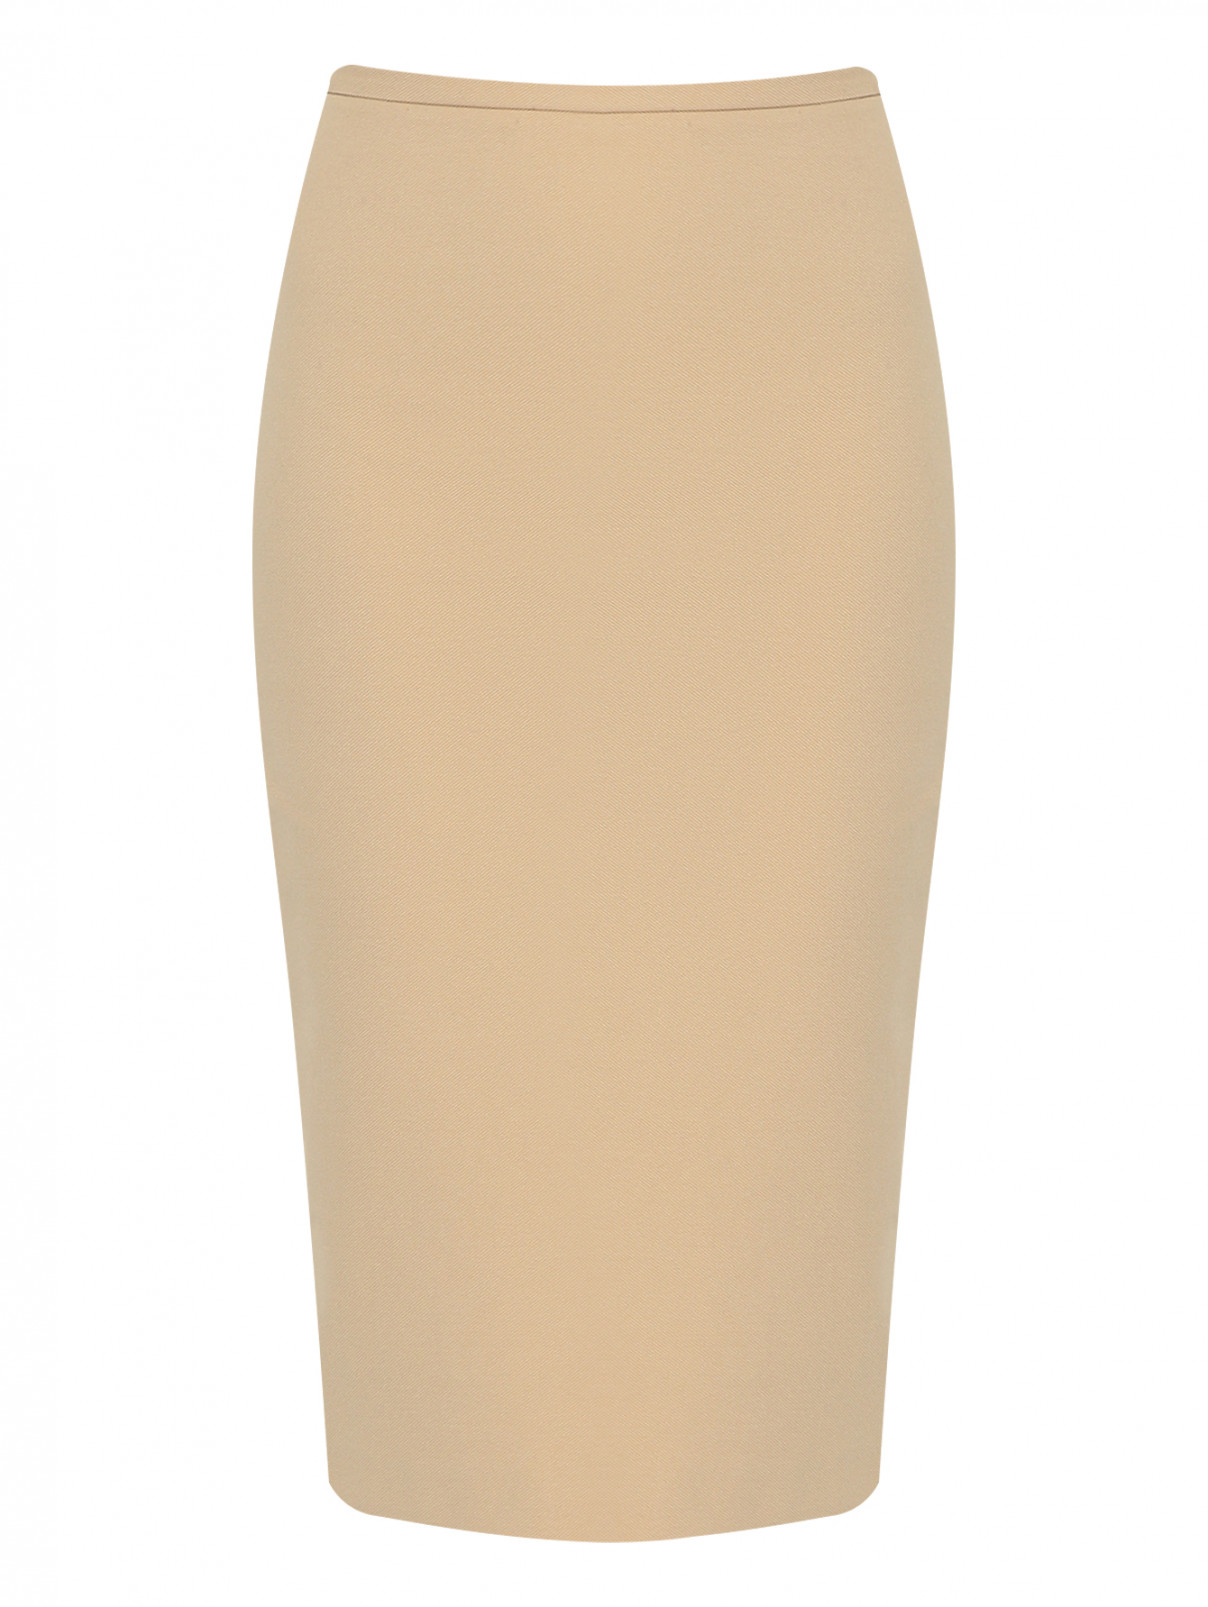 Однотонная юбка-карандаш Max Mara  –  Общий вид  – Цвет:  Бежевый